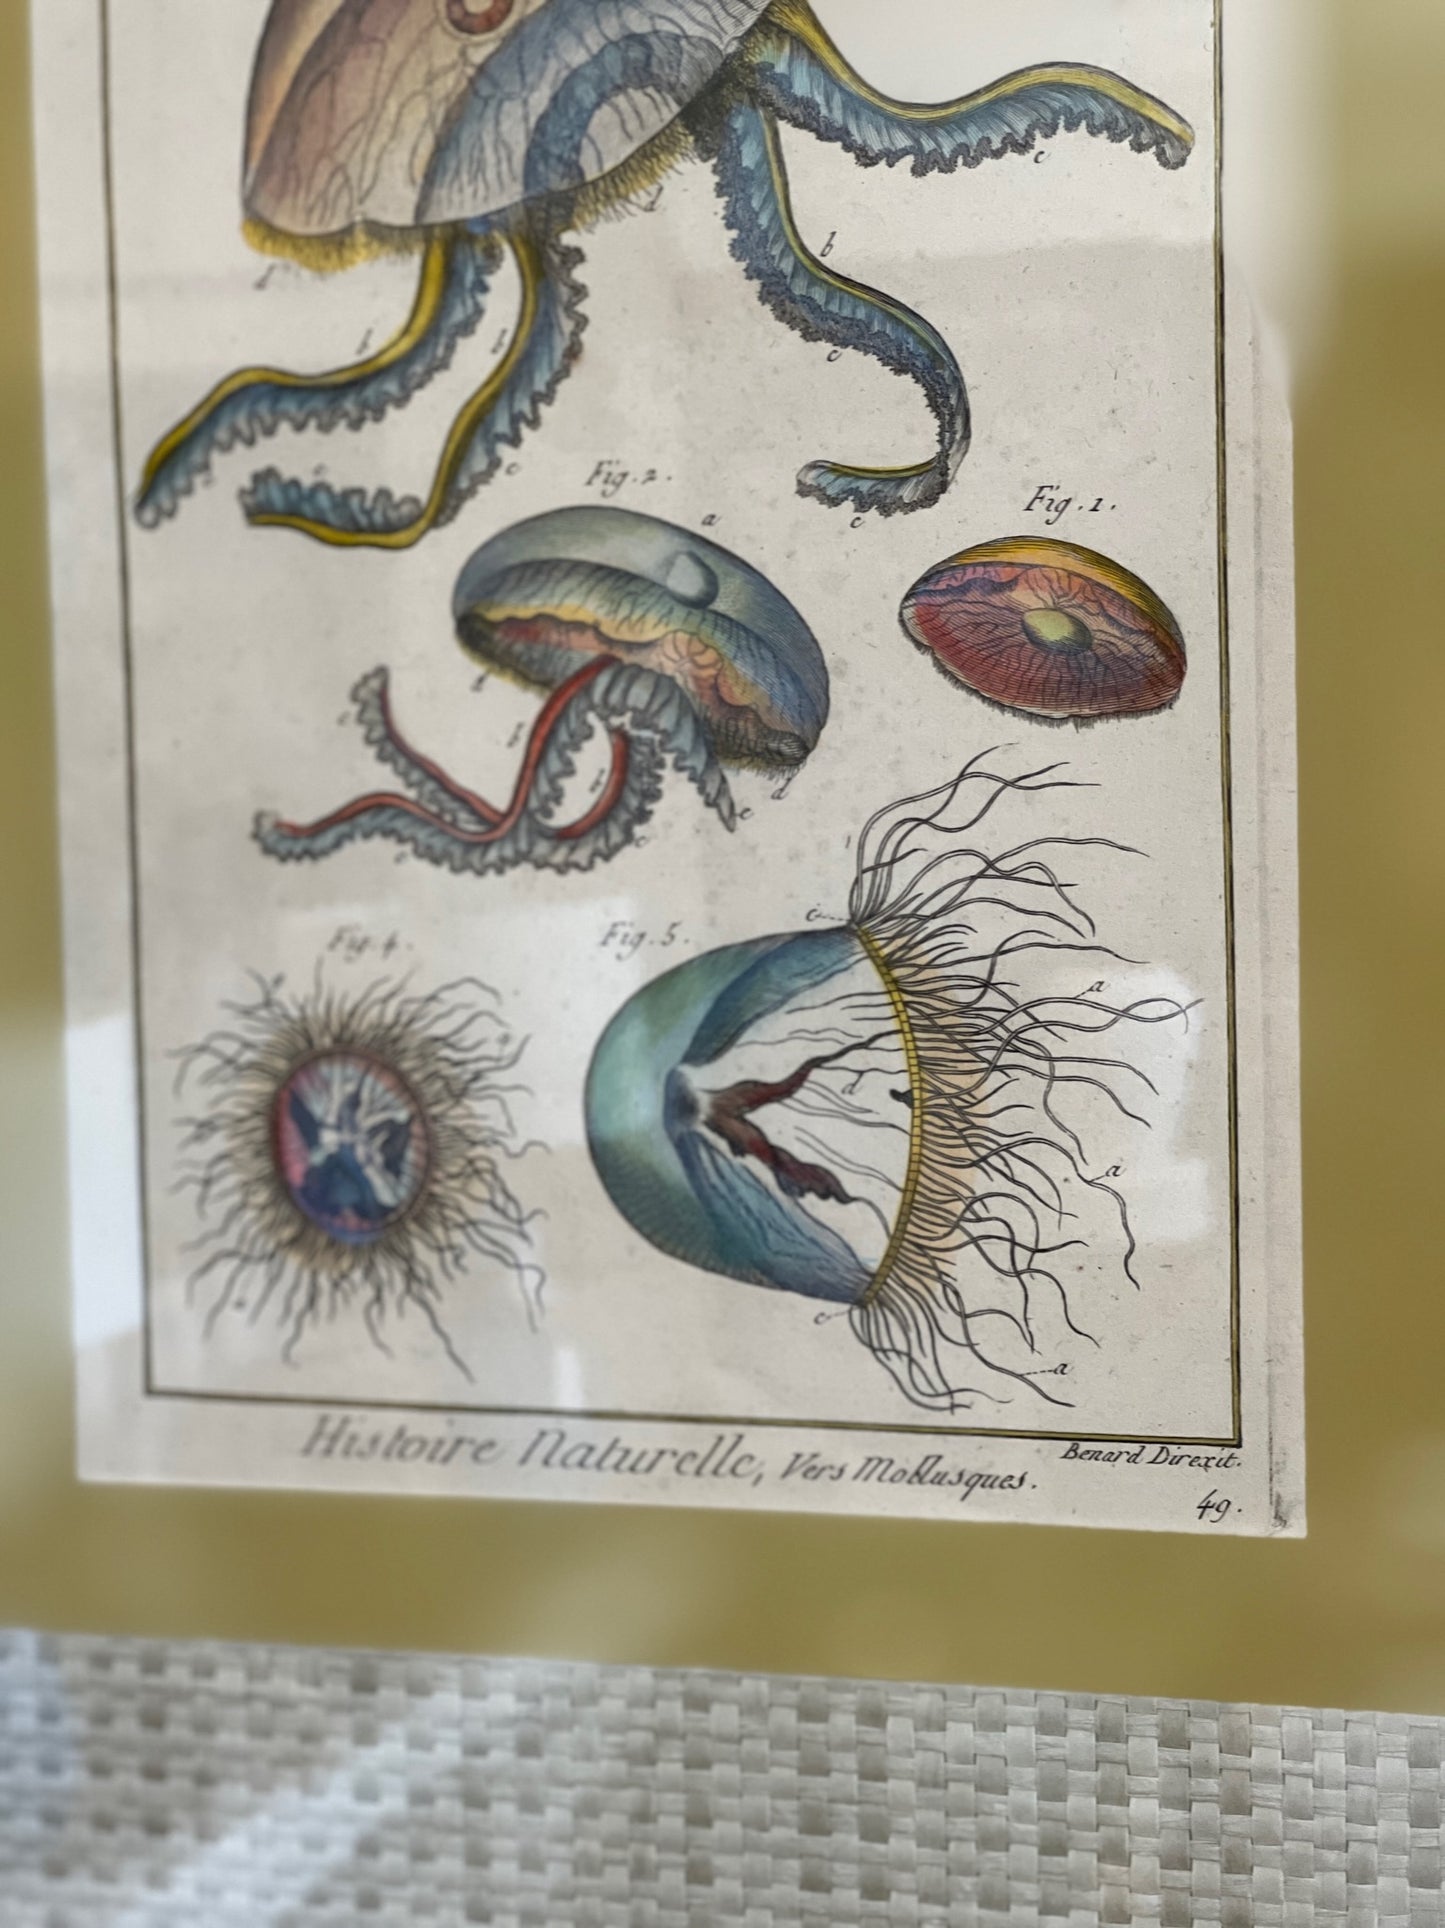 "Meduse, Medusa - PL 94" Colored Lithograph